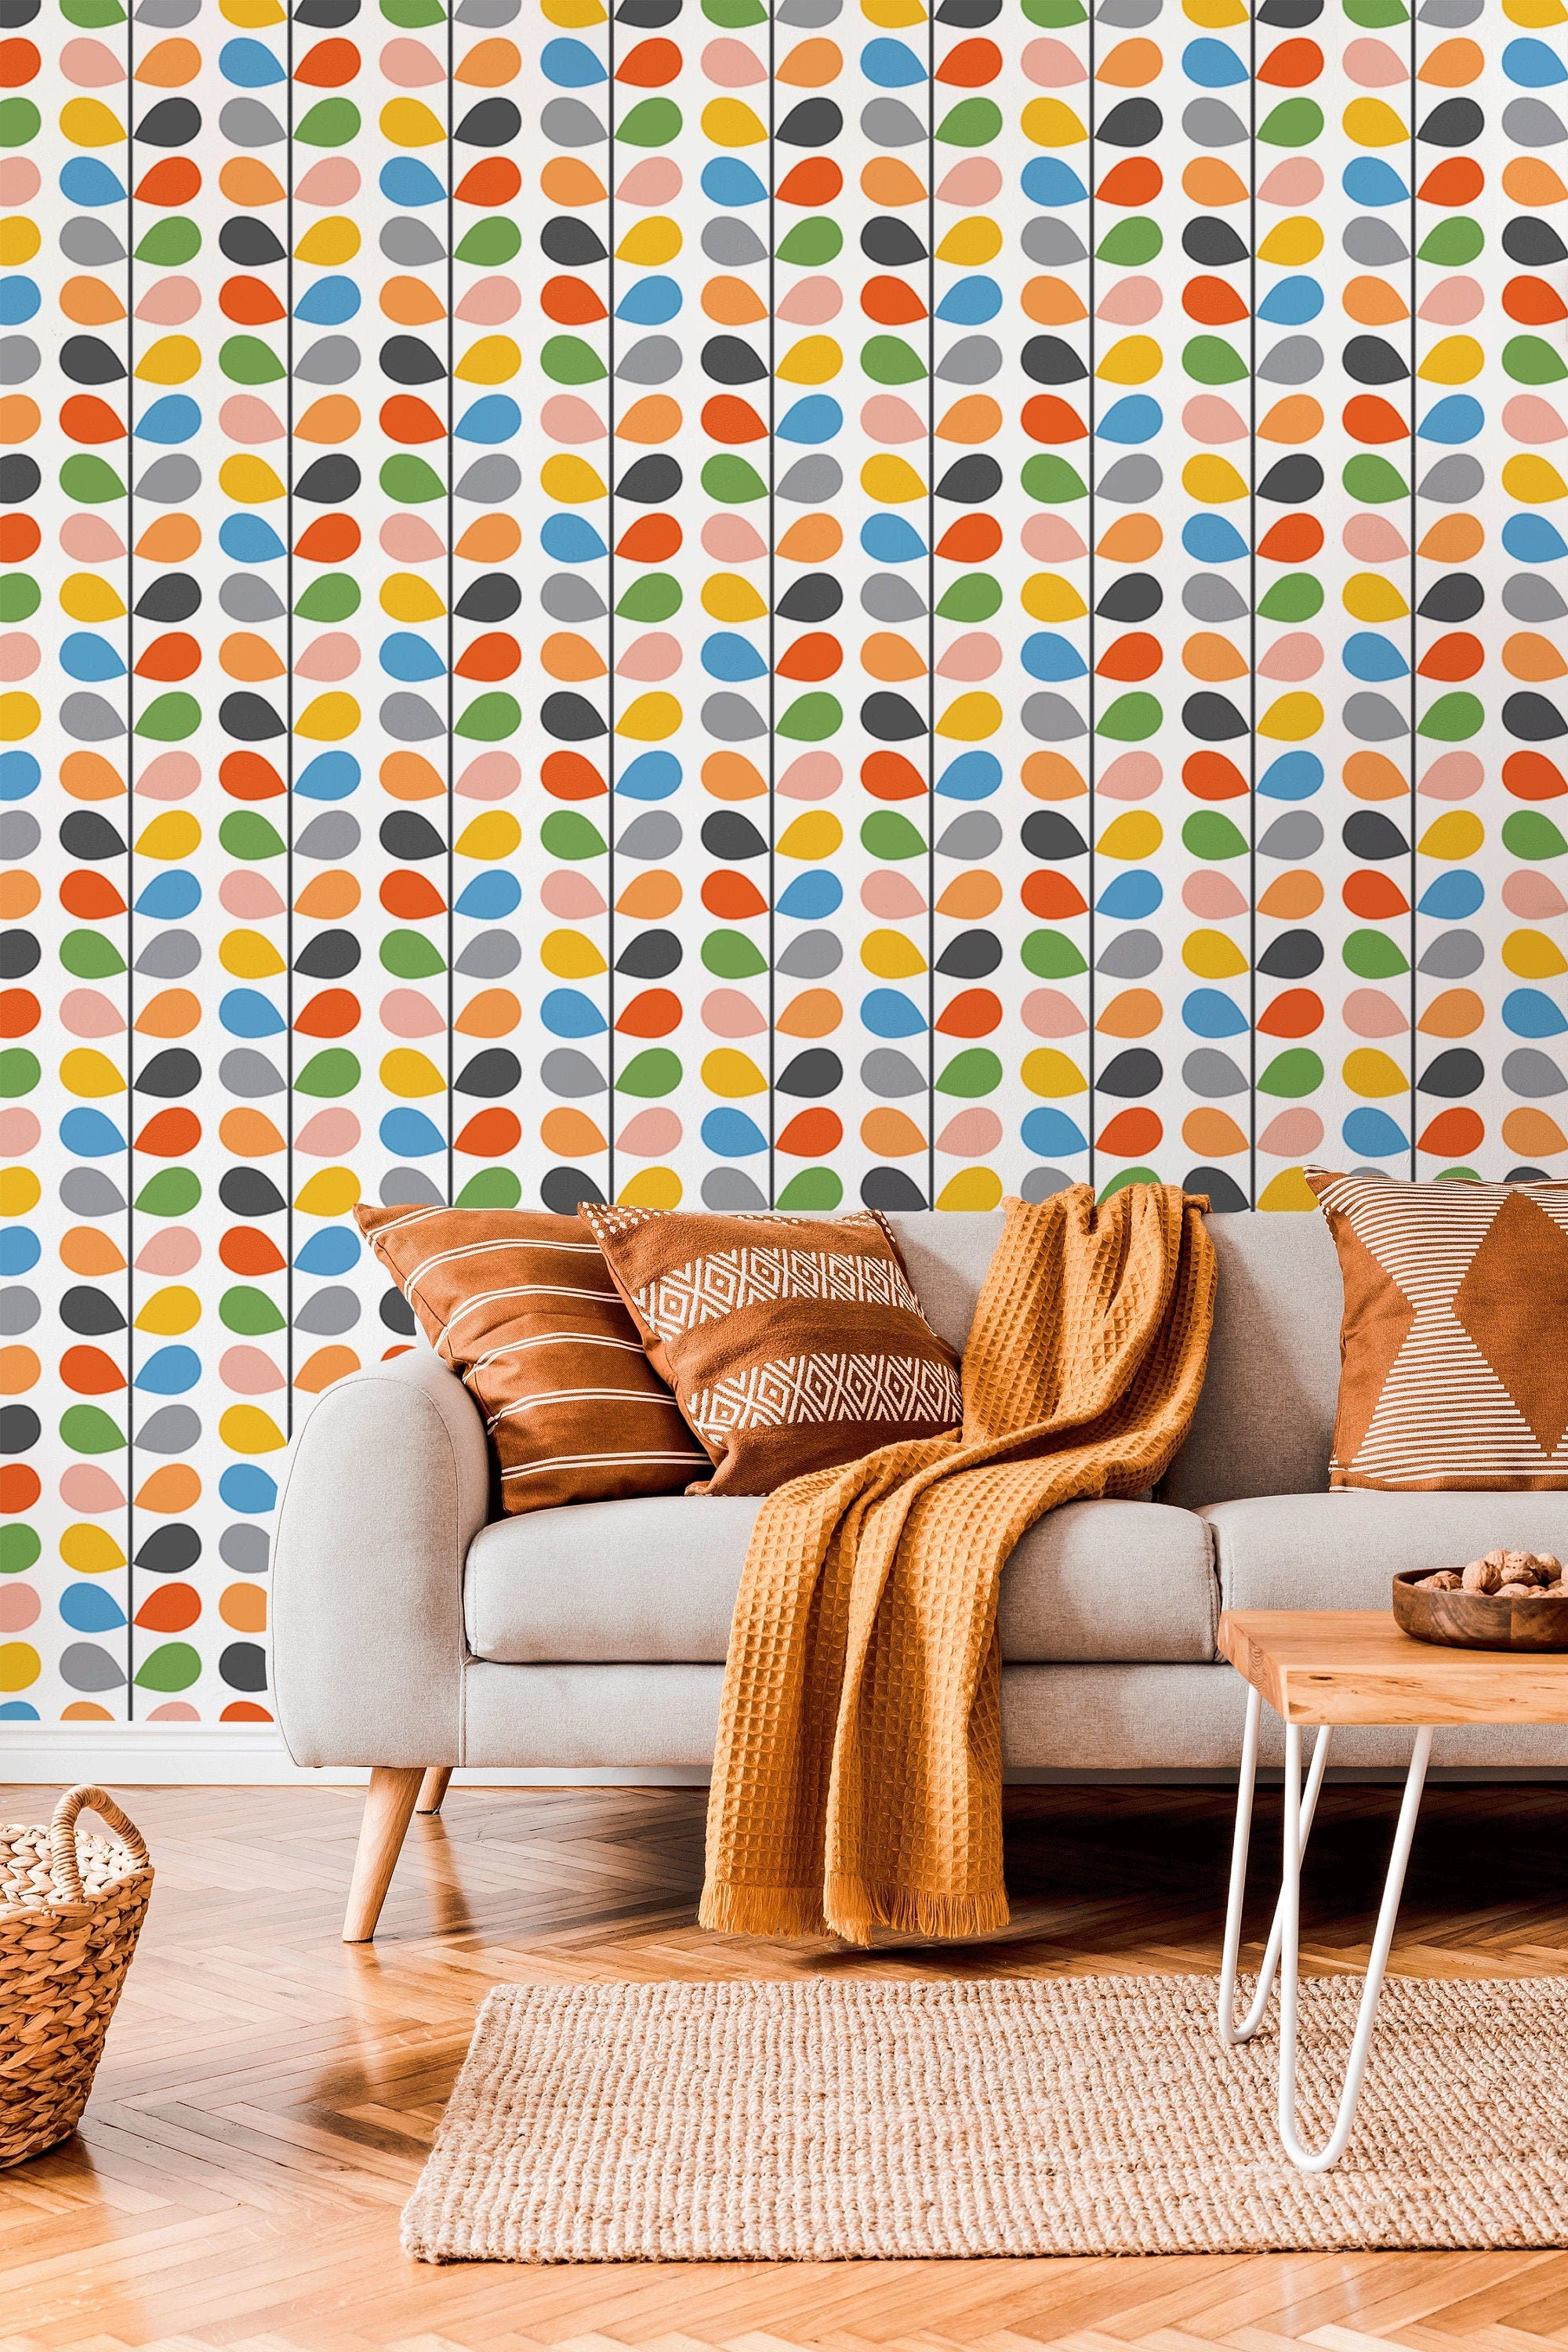 Buy Online  Abstract Geometric Retro Wallpaper Removable Peel Stick  Wallpaper Wall Decor Wall Art Wall Sticker in US